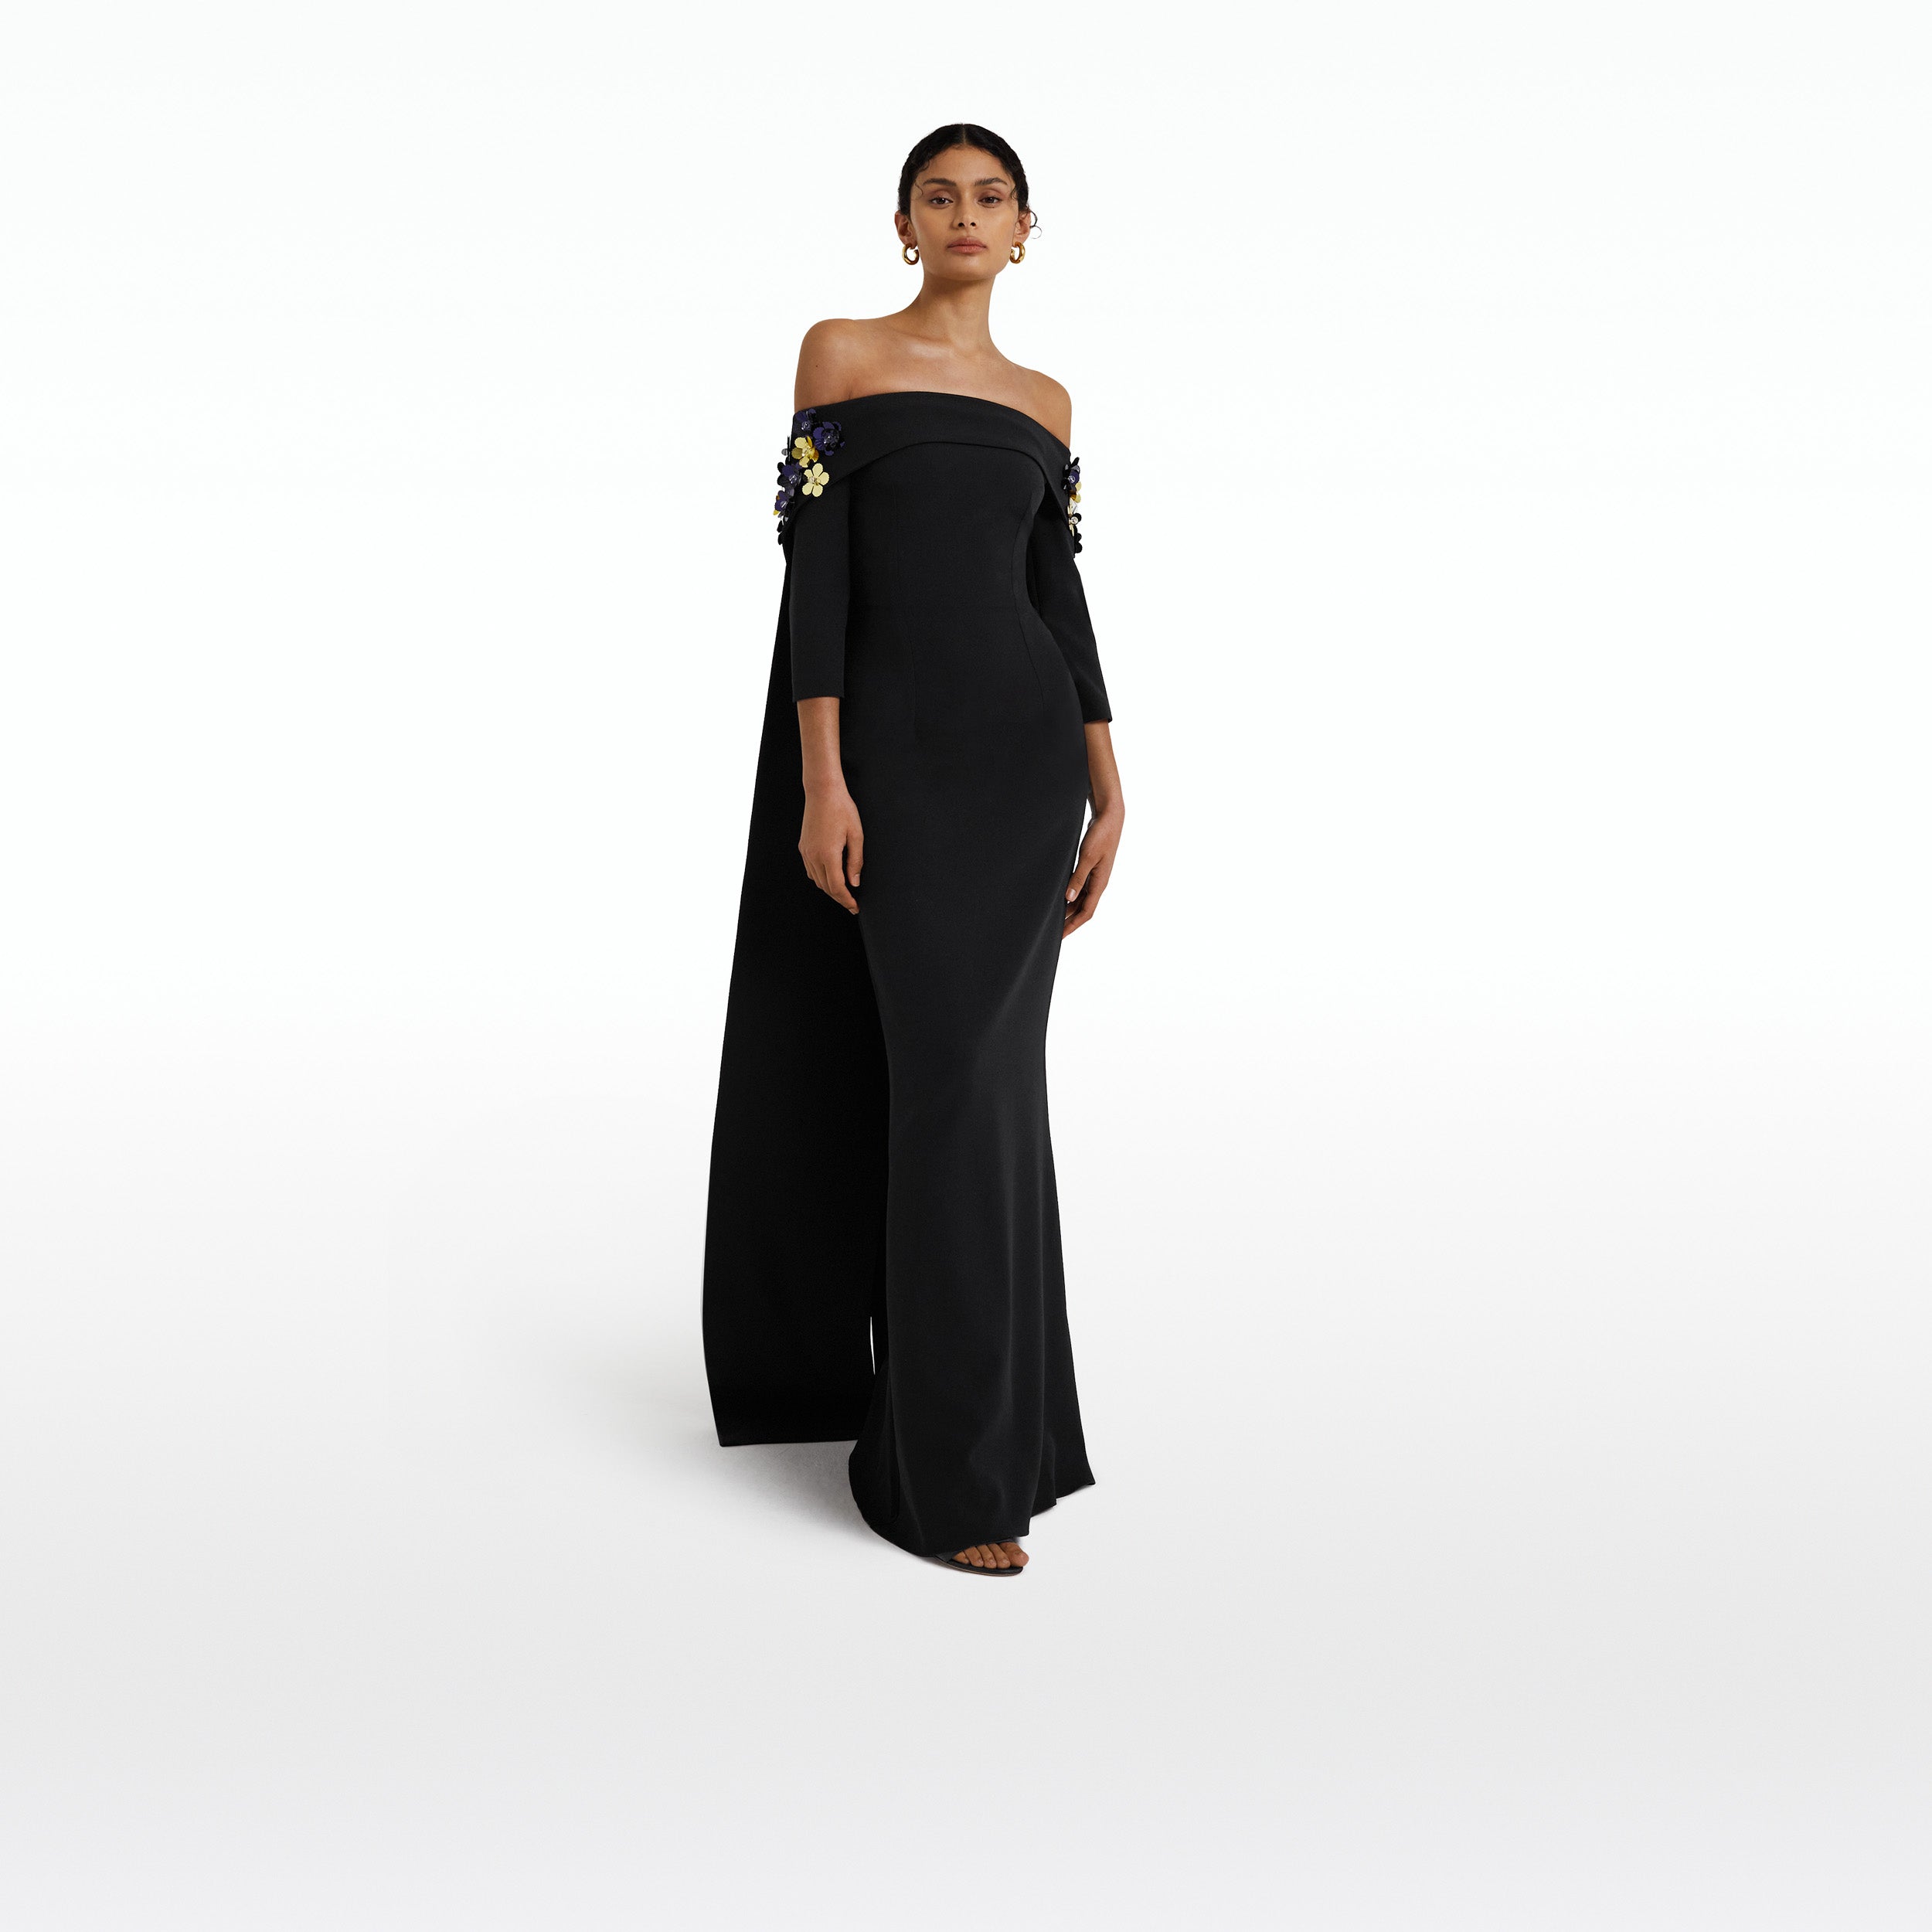 Bellara Black Harness with Soshin Dress